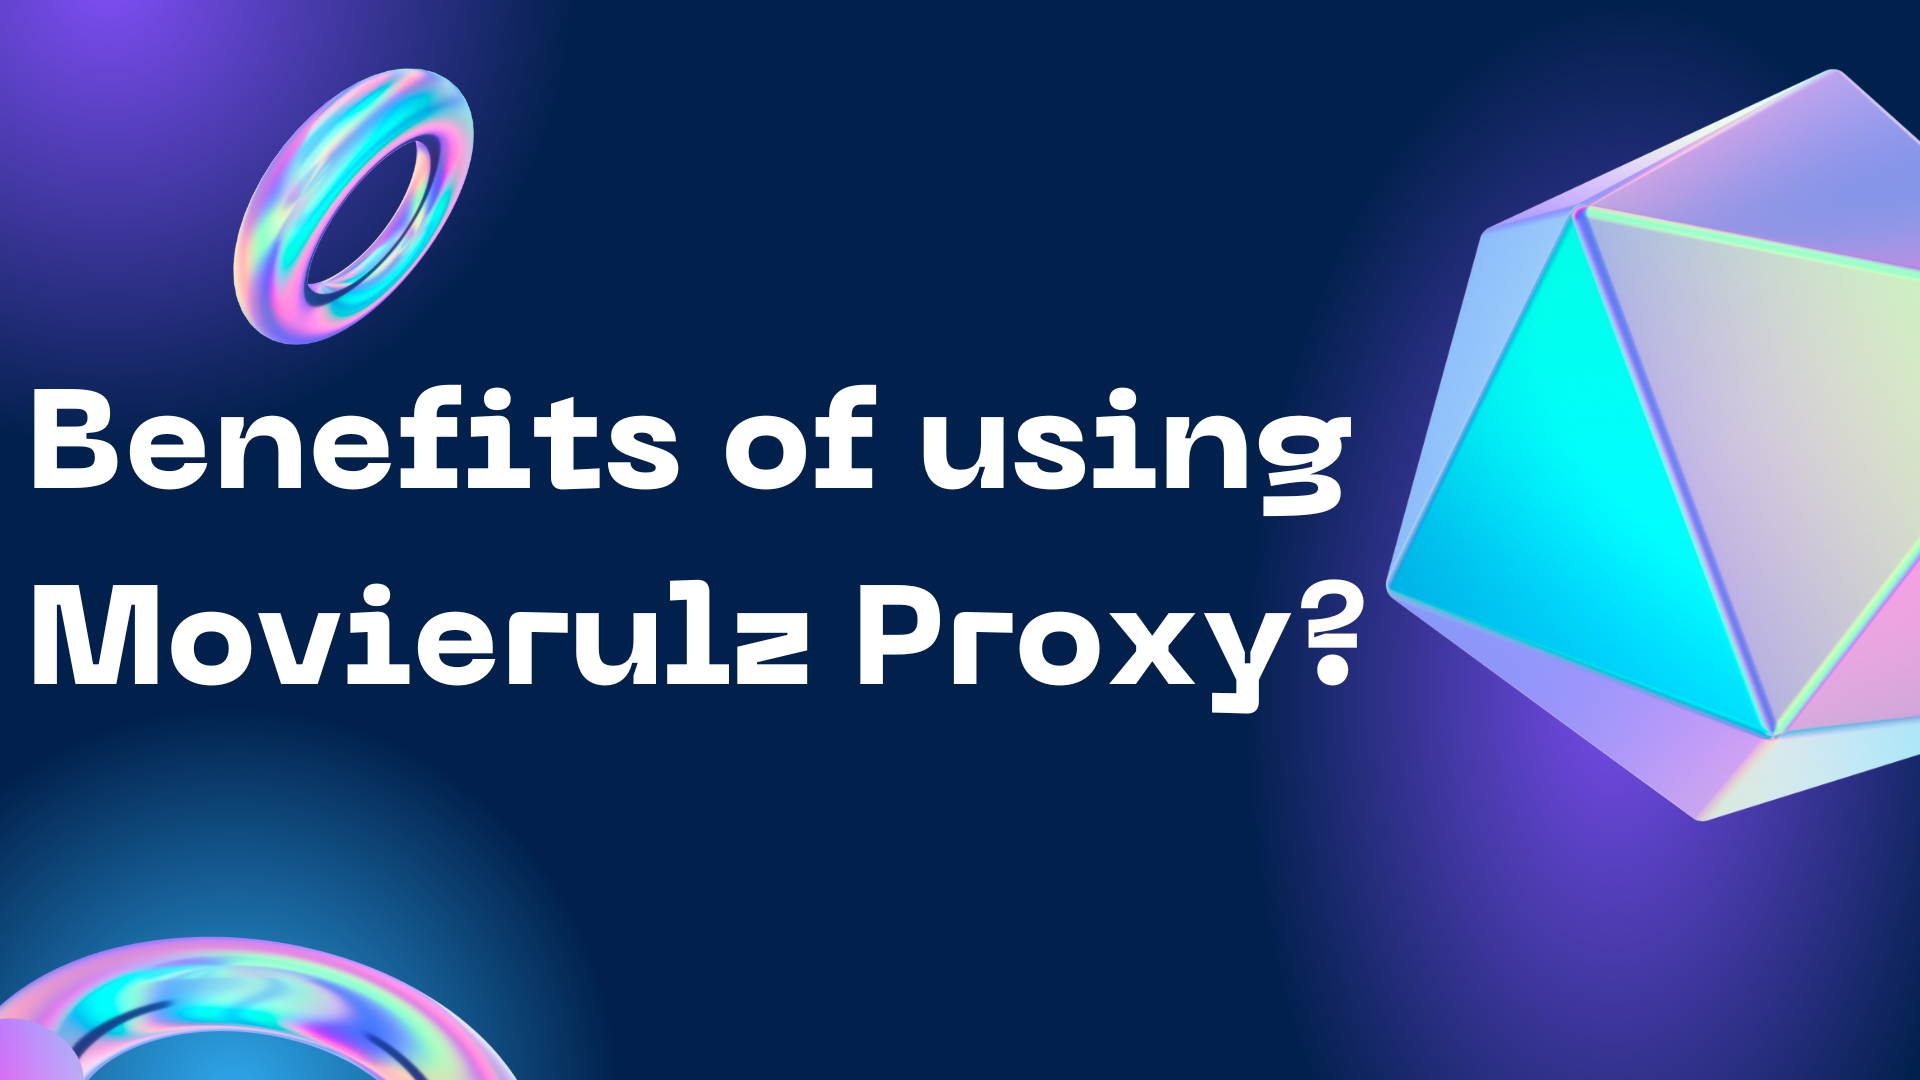 Benefits of using Movierulz Proxy?